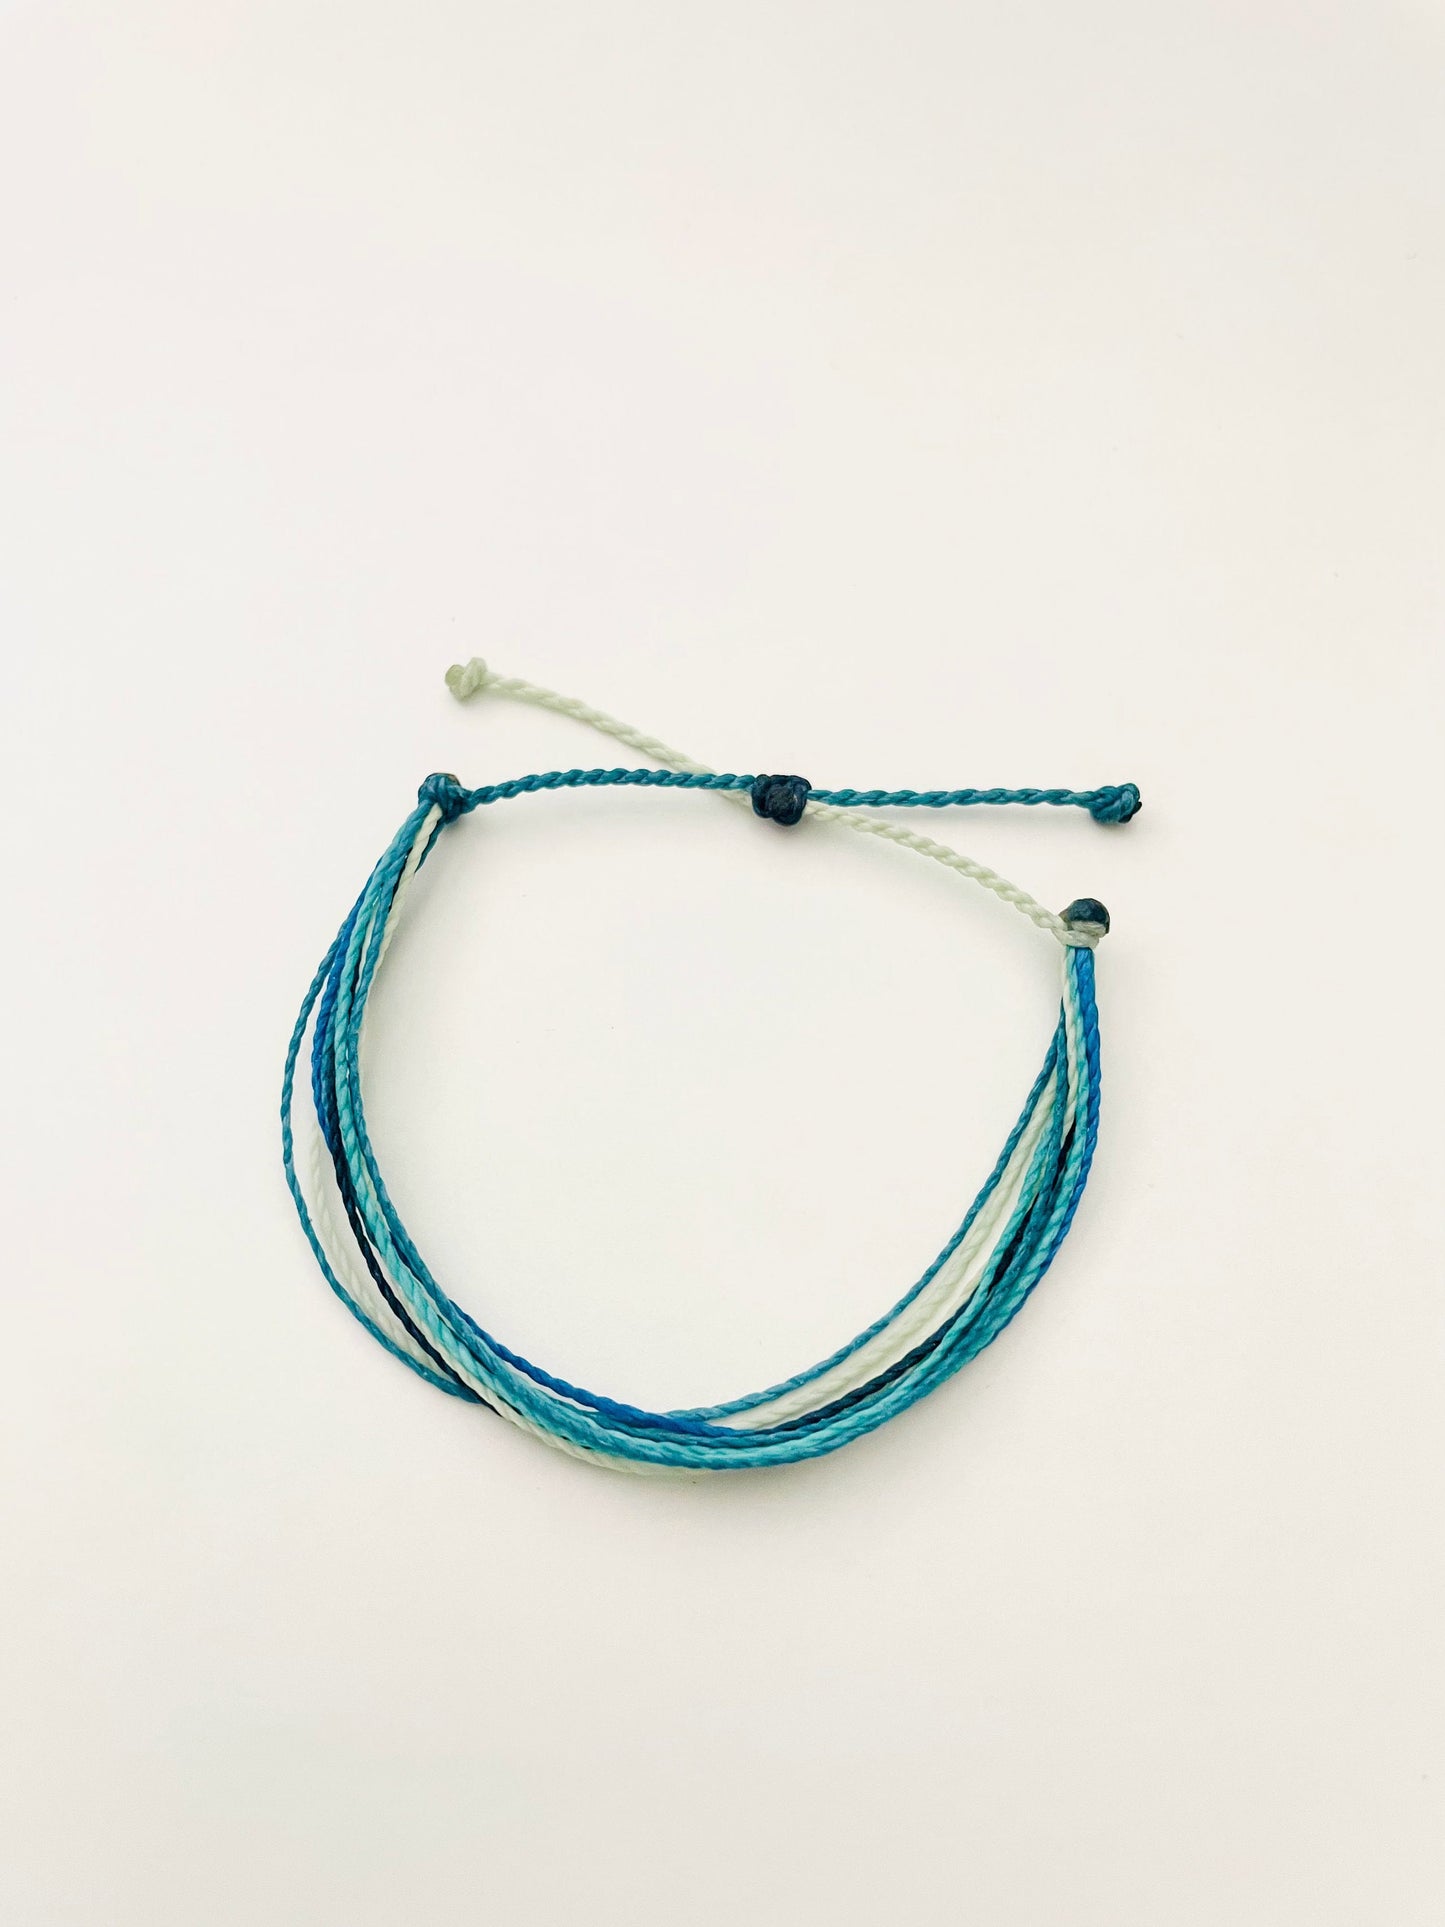 Cord Bracelet, Surfer Bracelet, Adjustable Bracelet, String Bracelet, Waterproof, Handmade